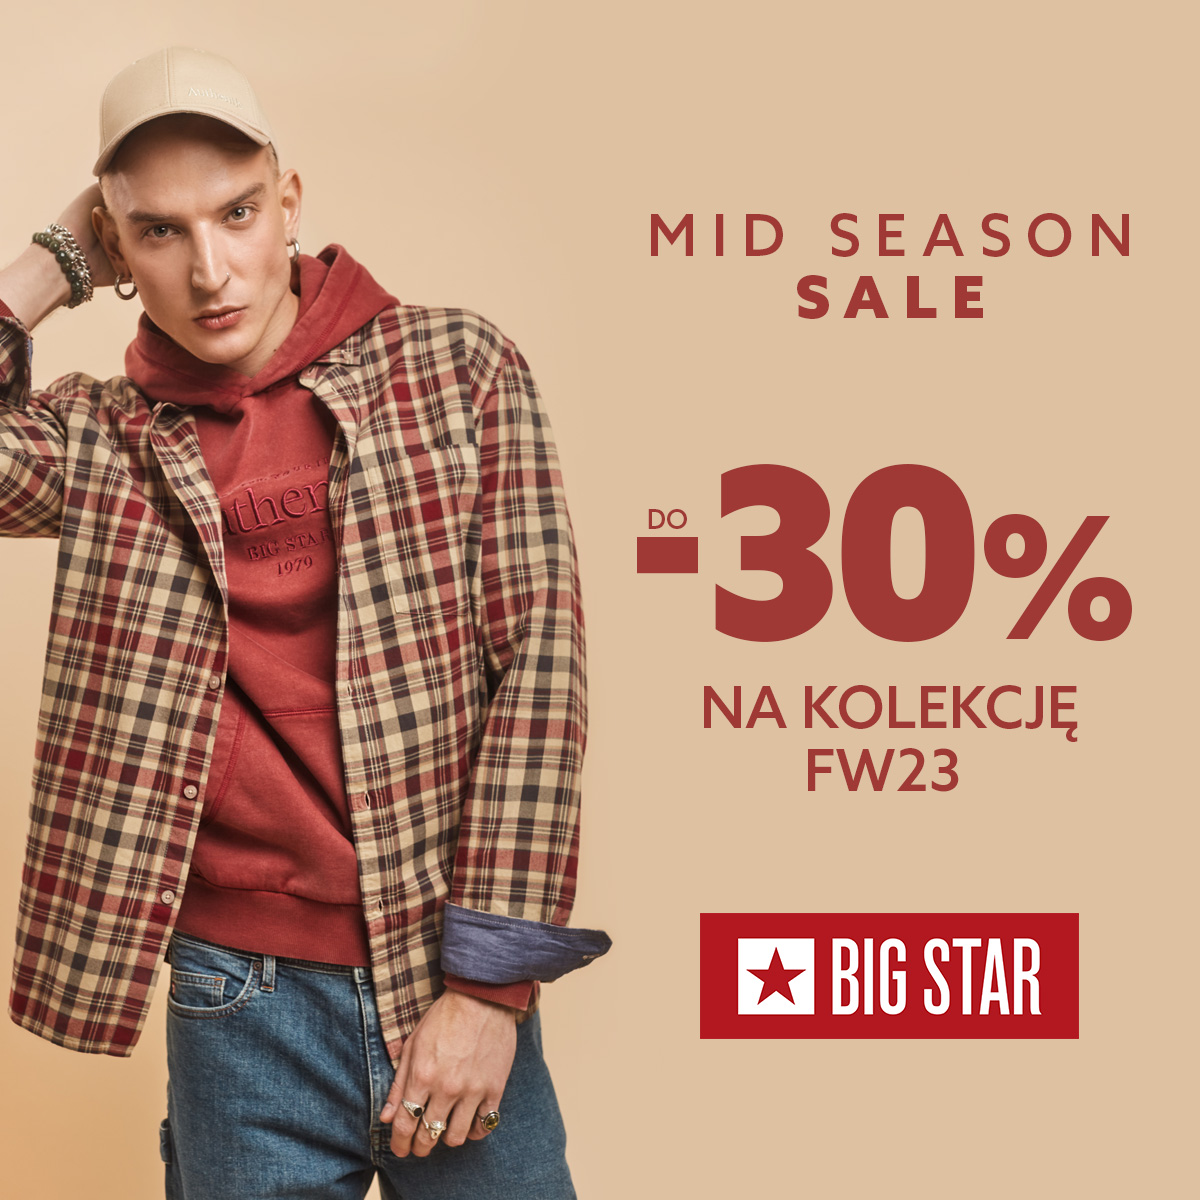 BIG STAR: mid season sale